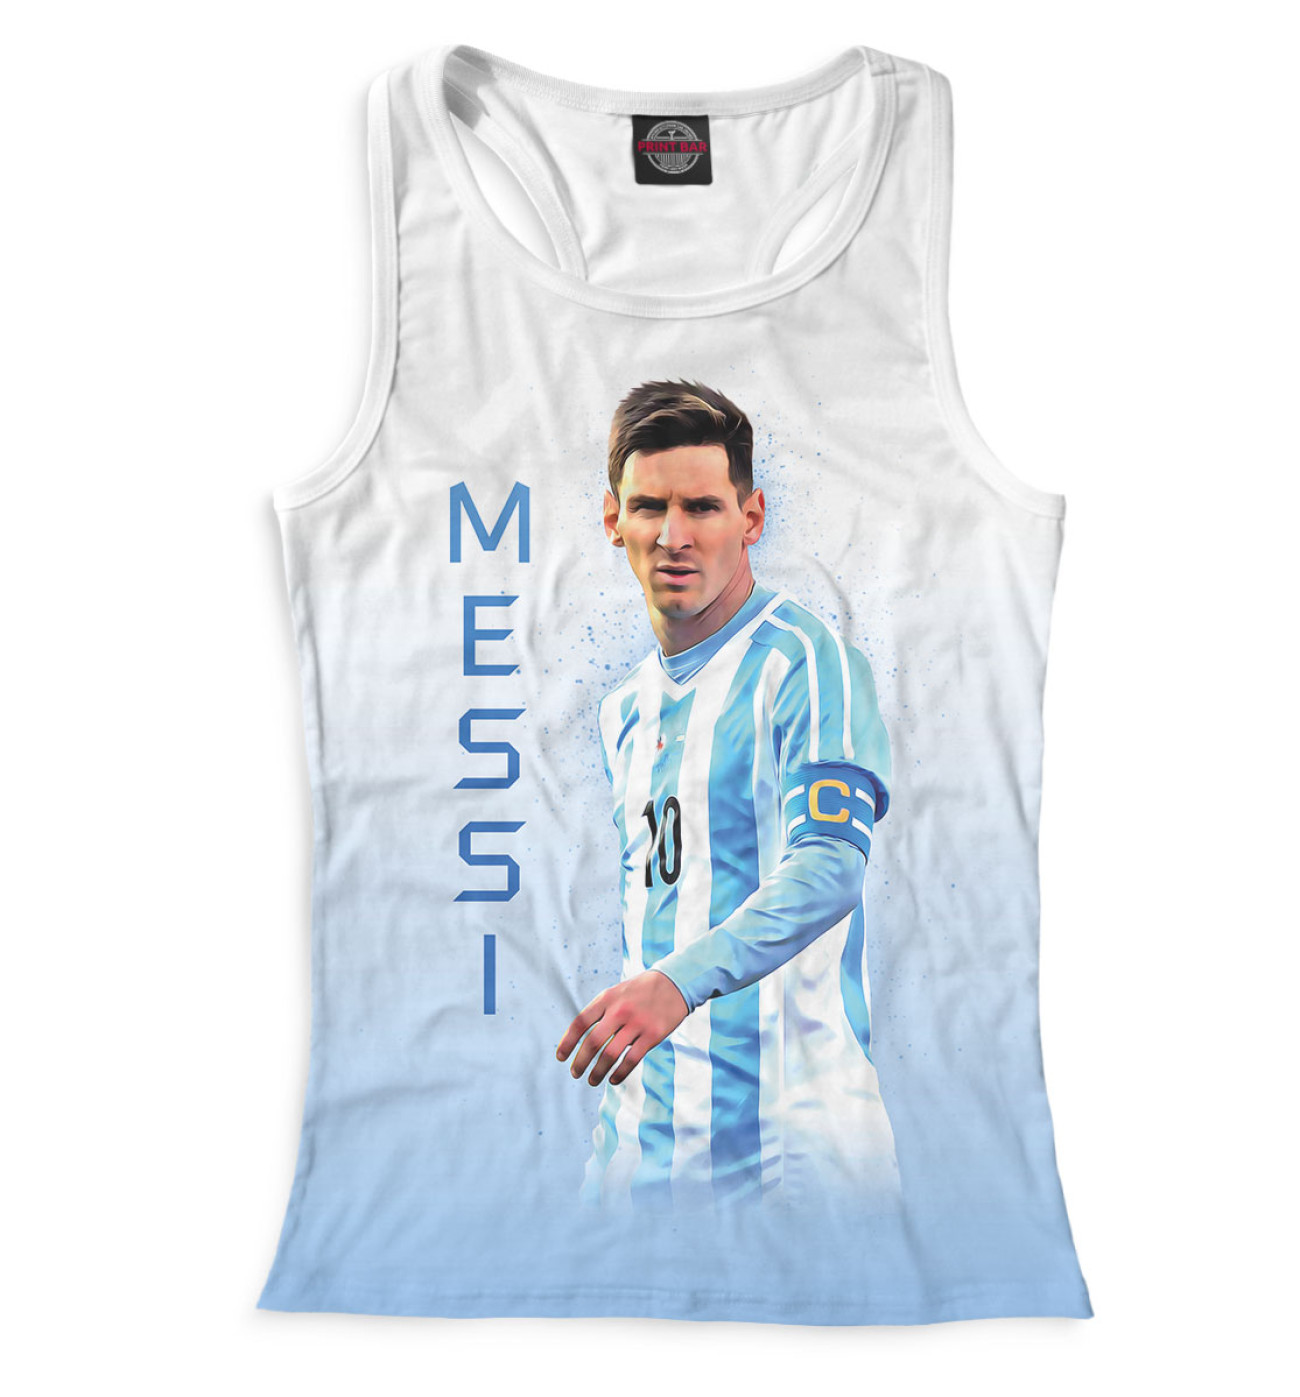 Женская Борцовка Lionel Messi, артикул: FLT-971474-mayb-1